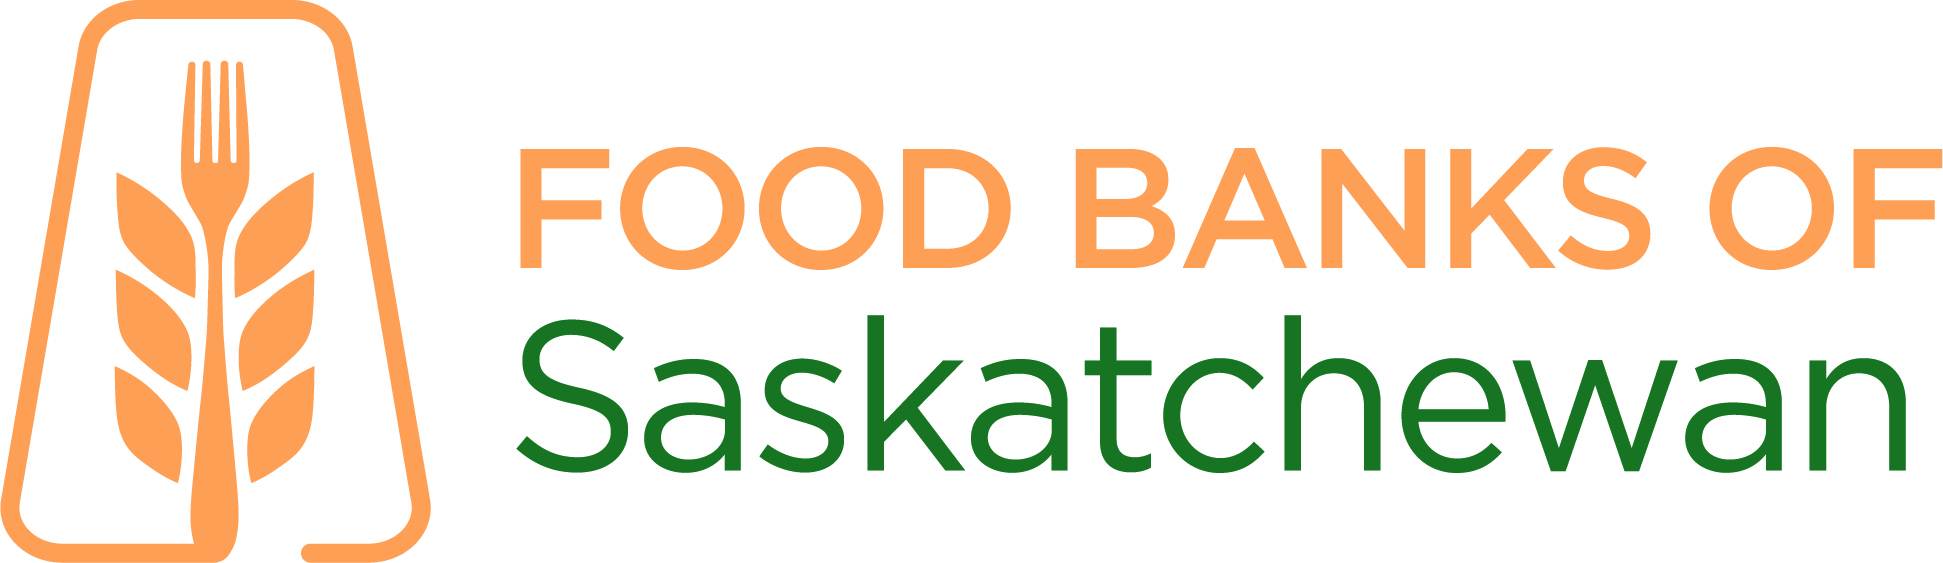 Food Banks of Saskatchewan logo